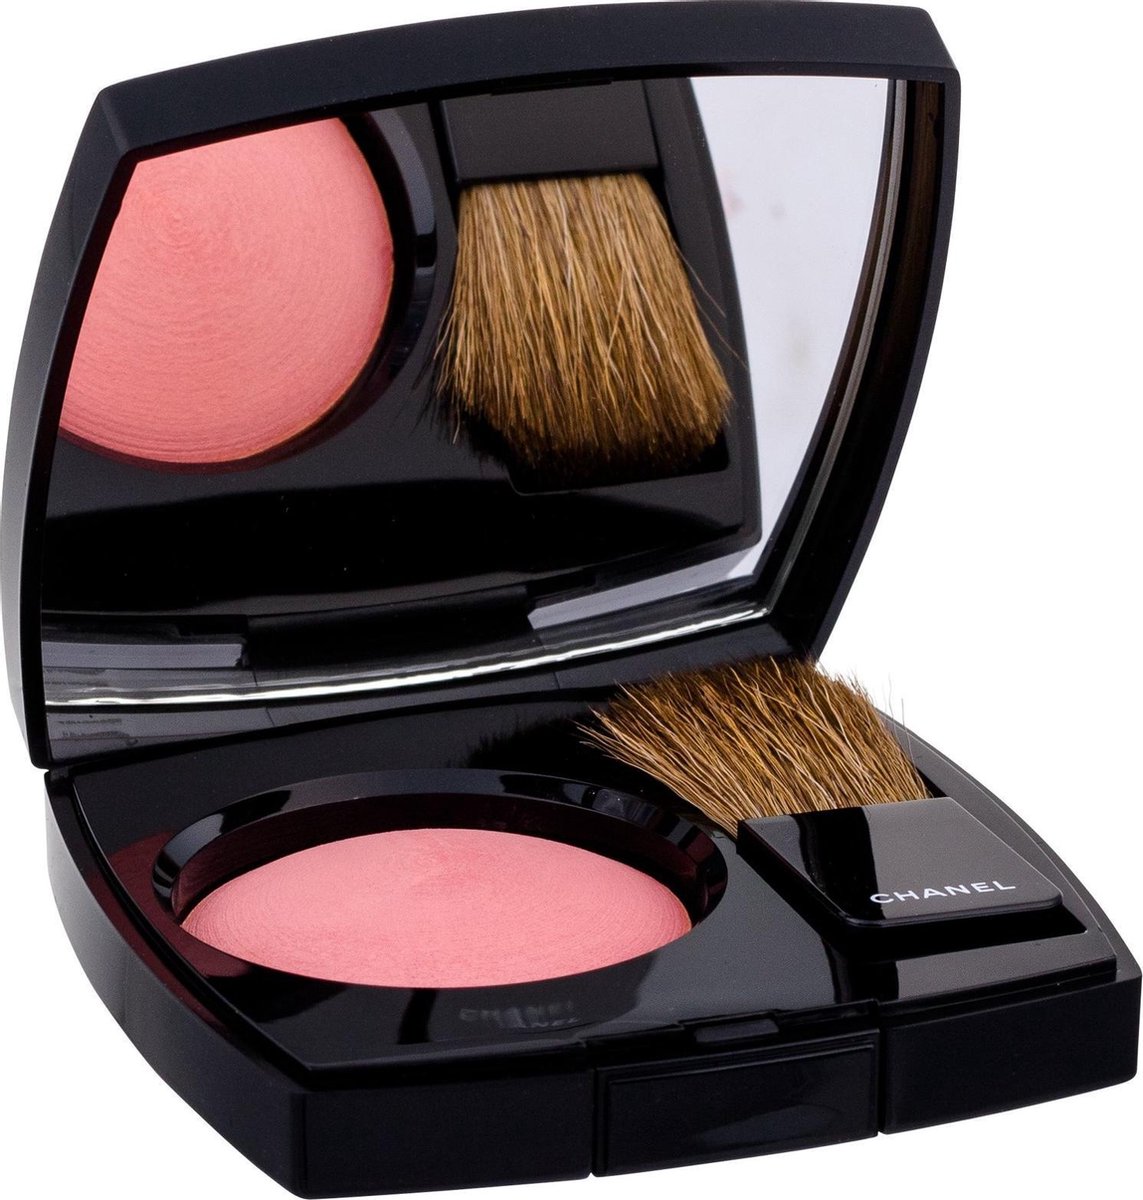 NEW Chanel Powder Blush (No. 72 Rose Initiale) 3.5g/0.12oz Womens Makeup